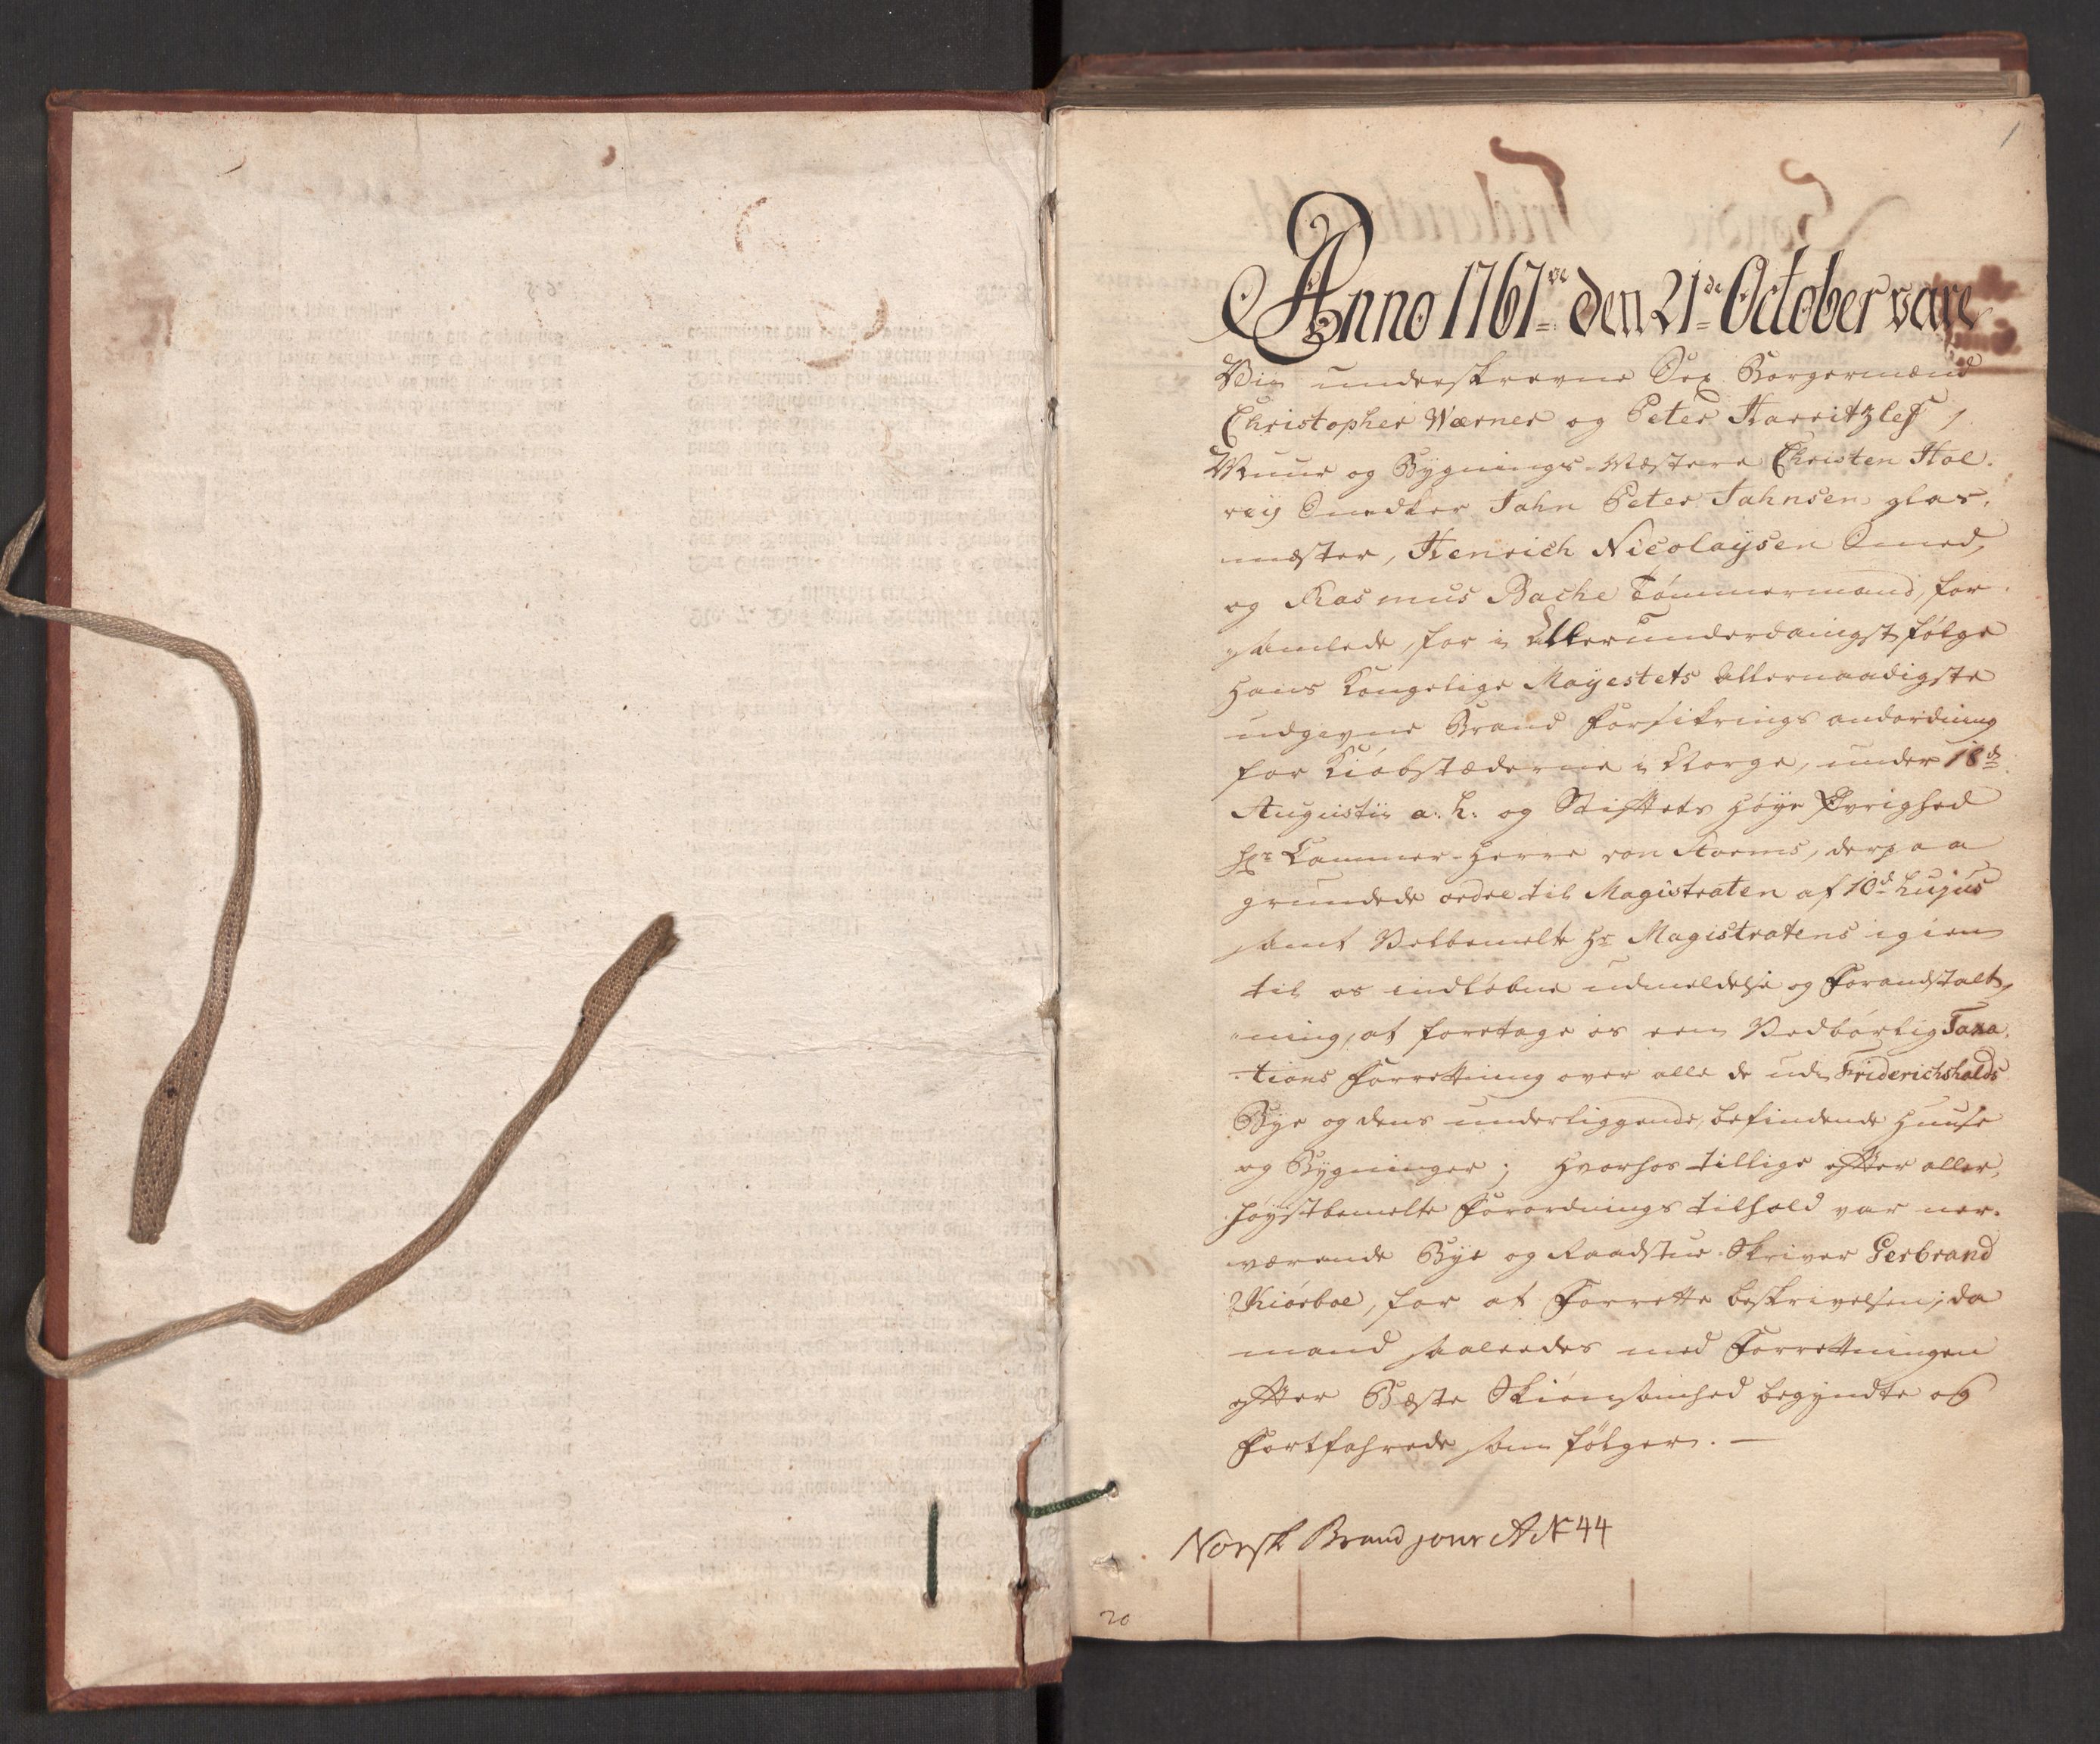 Kommersekollegiet, Brannforsikringskontoret 1767-1814, RA/EA-5458/F/Fa/L0023/0004: Fredrikshald / Branntakstprotokoll, 1767